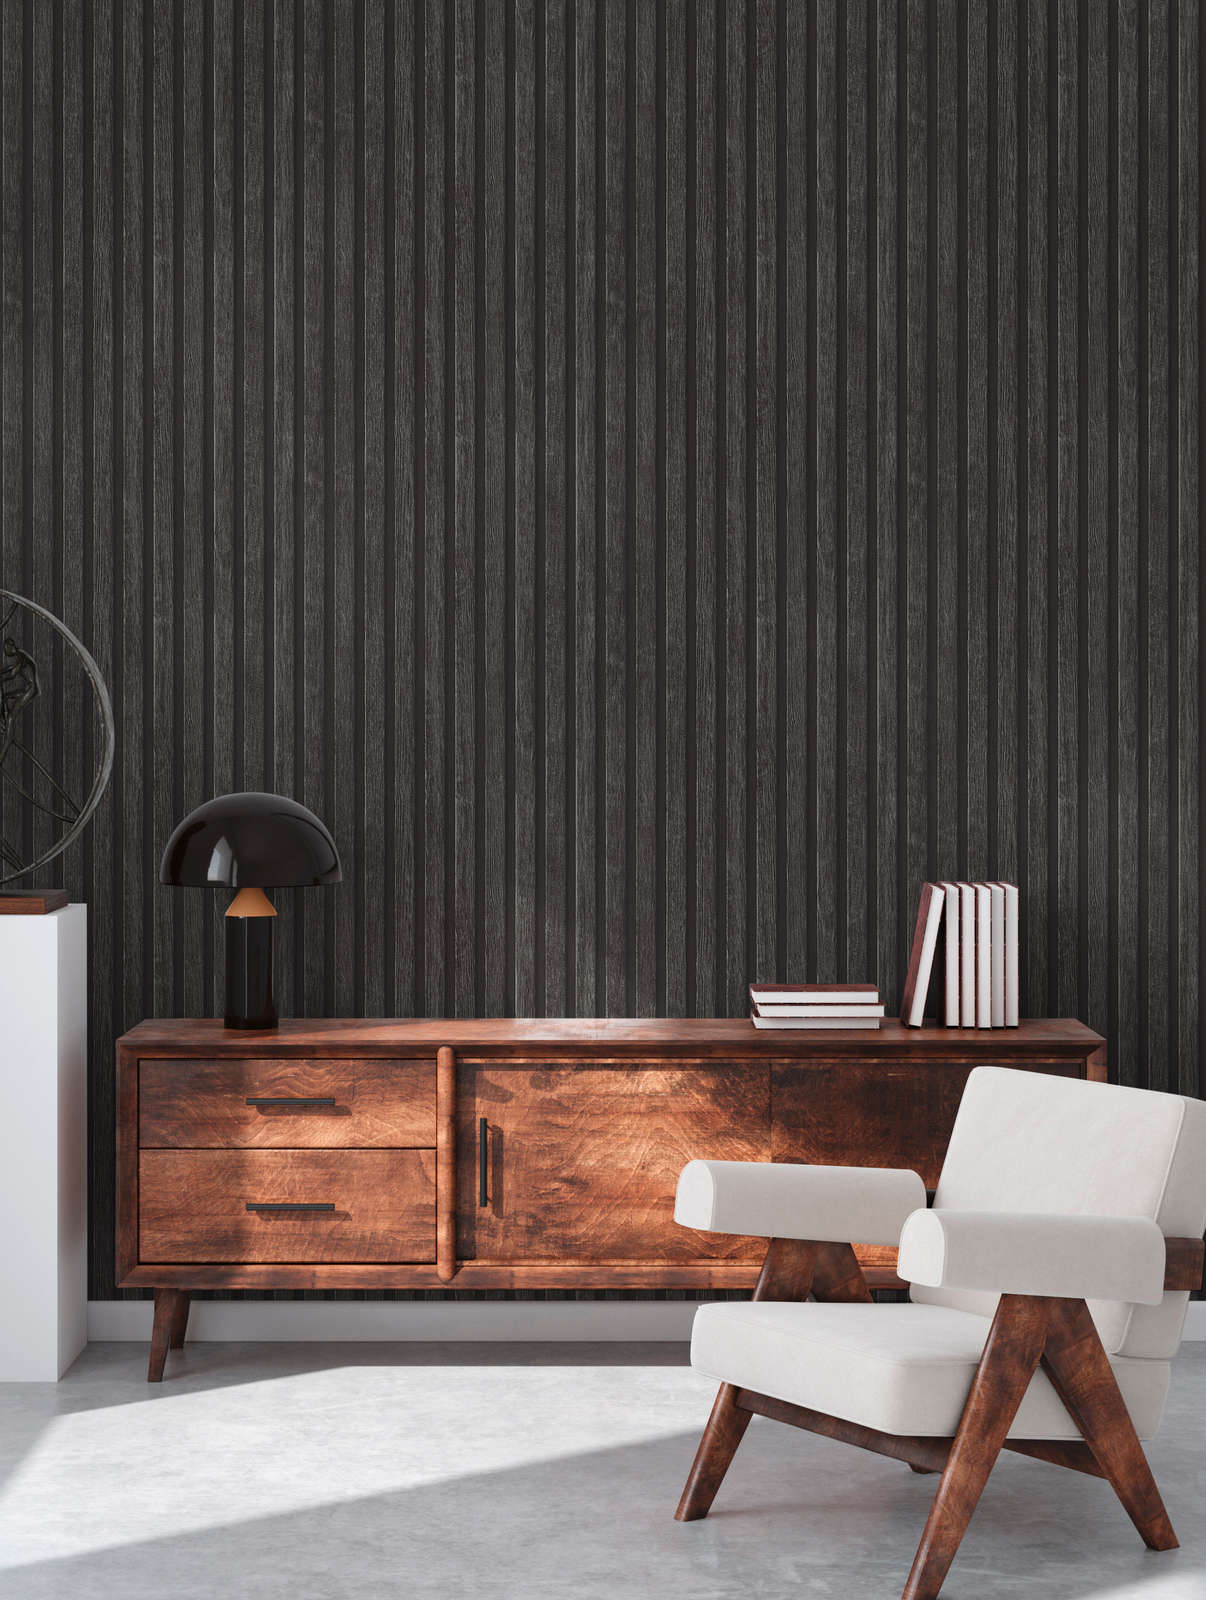             Wallpaper wood look with panel pattern - black, brown
        